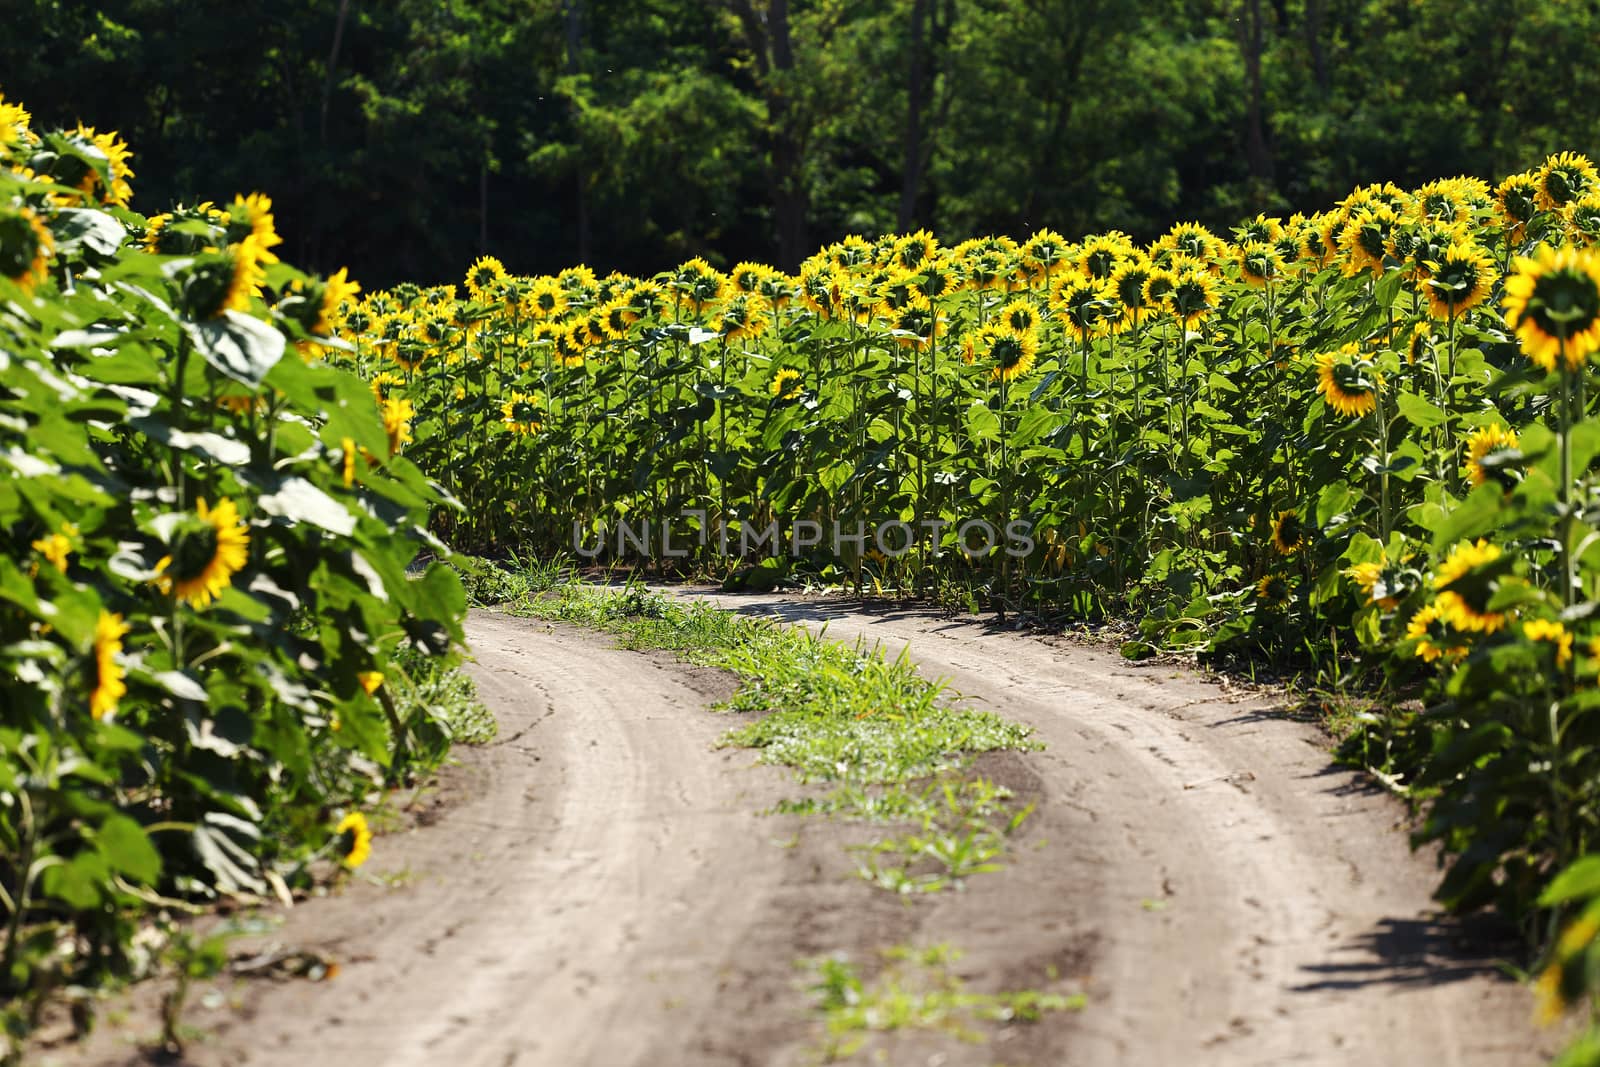 sunflowers by alexkosev